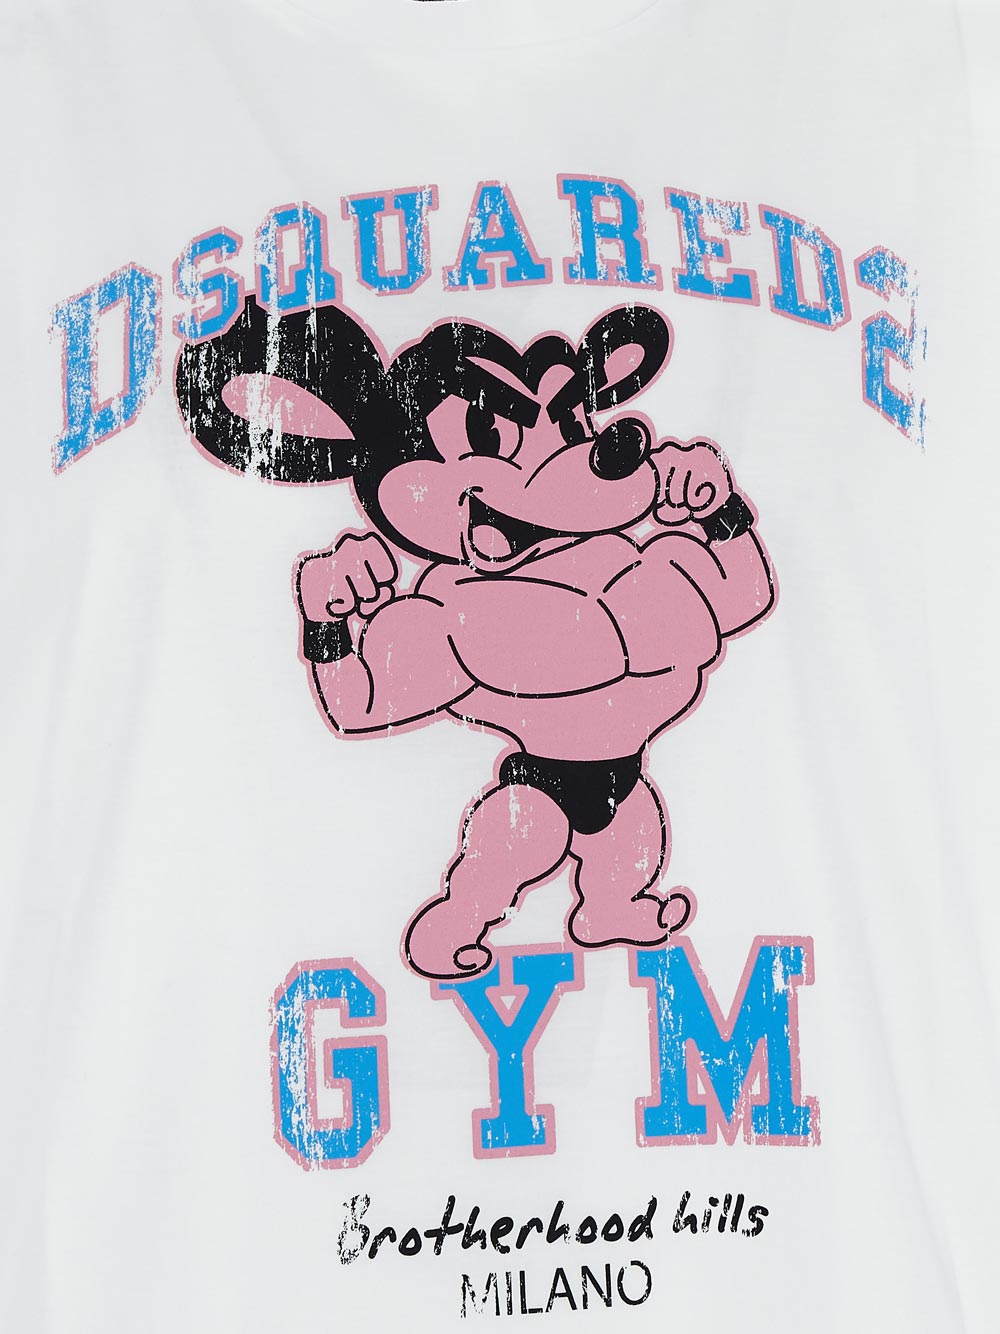 Dsquared2 Gym Regular T-Shirt